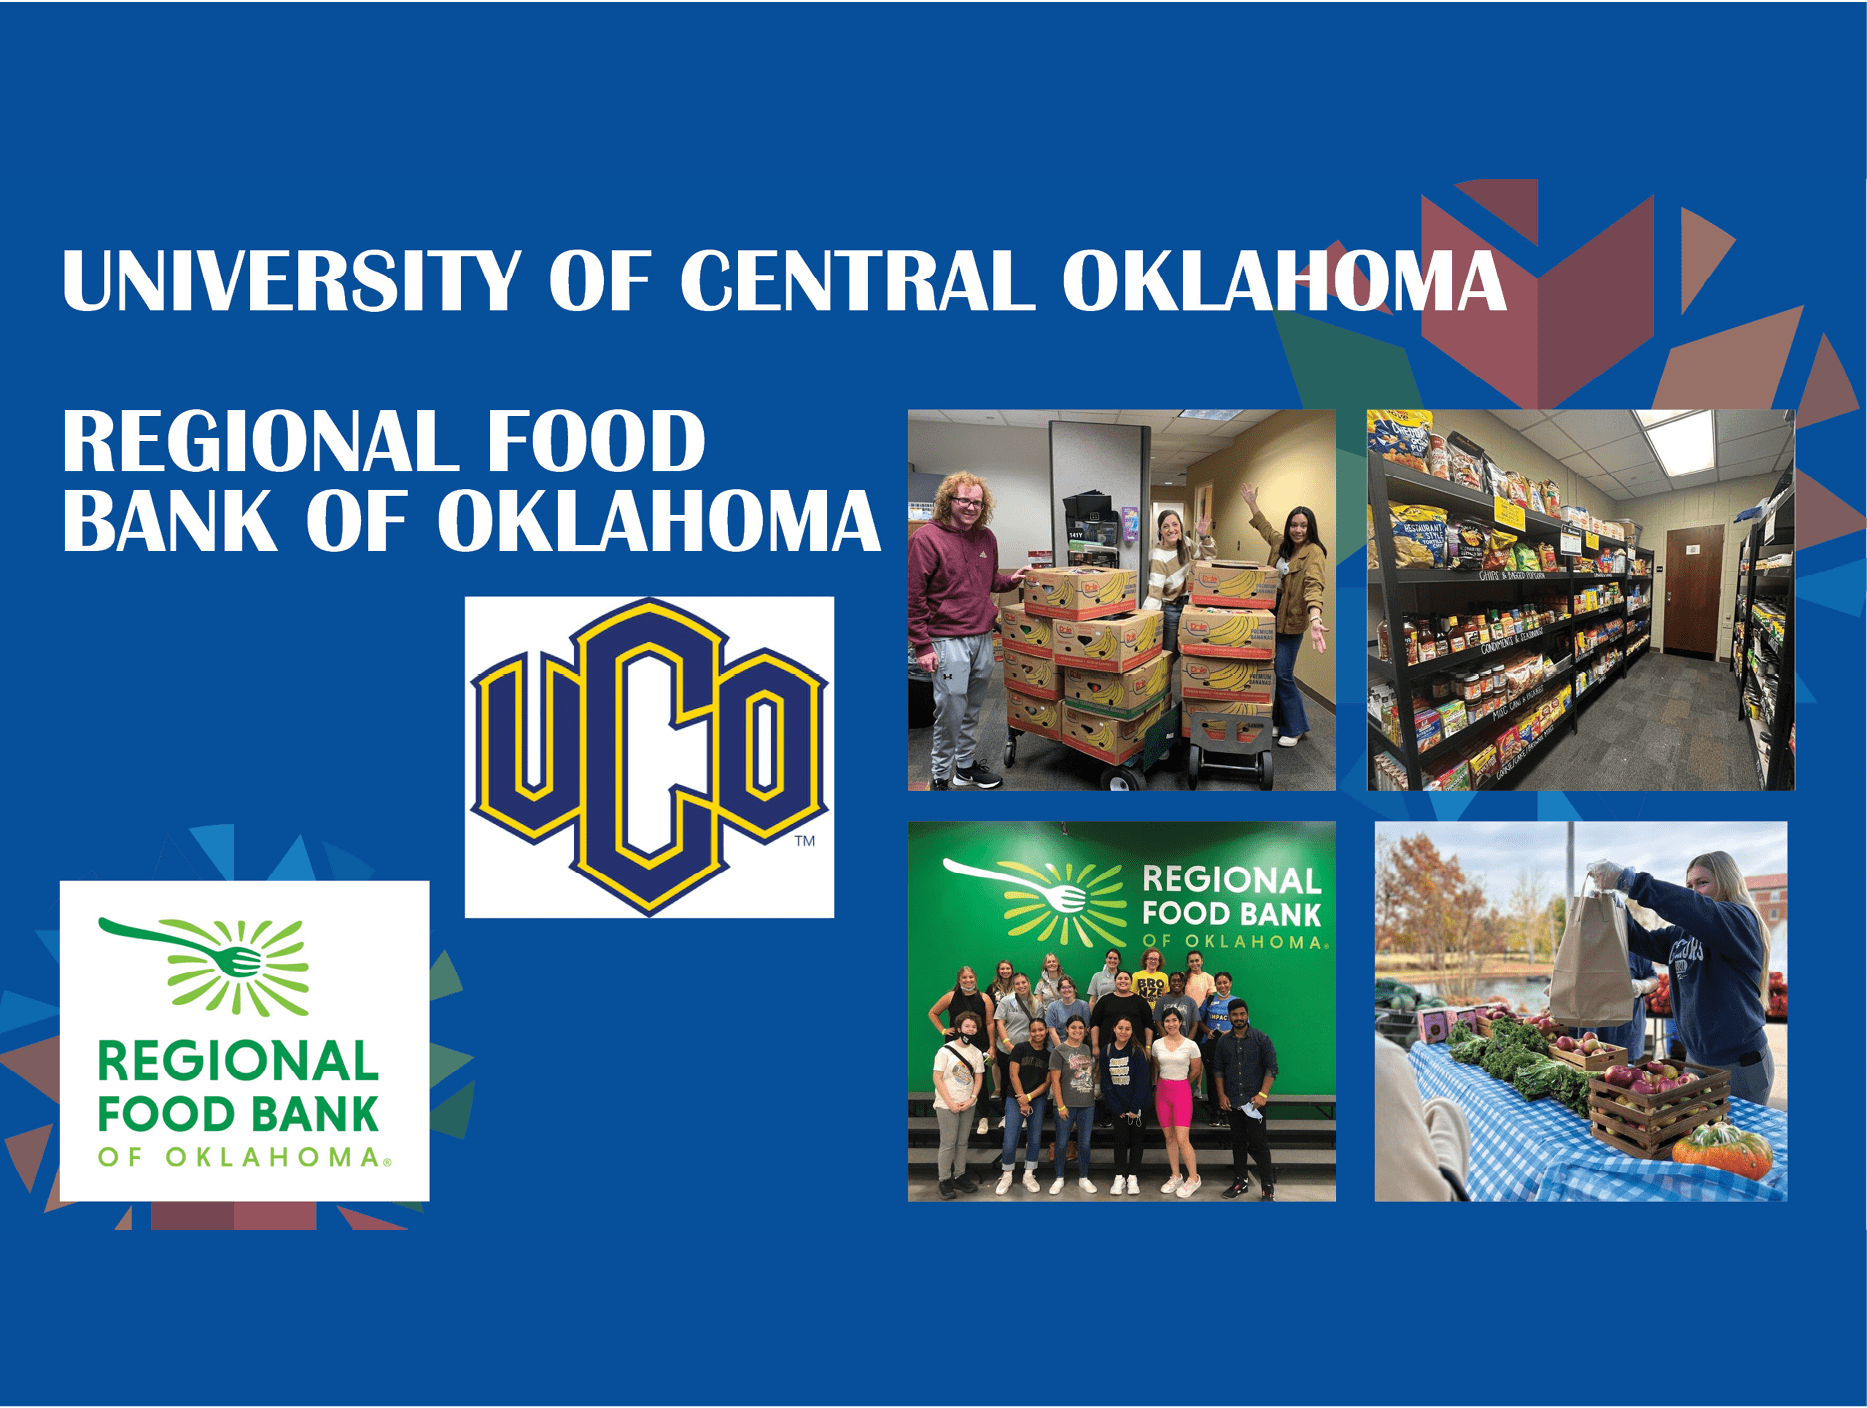 University of Central Oklahoma and Regional Food Bank of Oklahoma